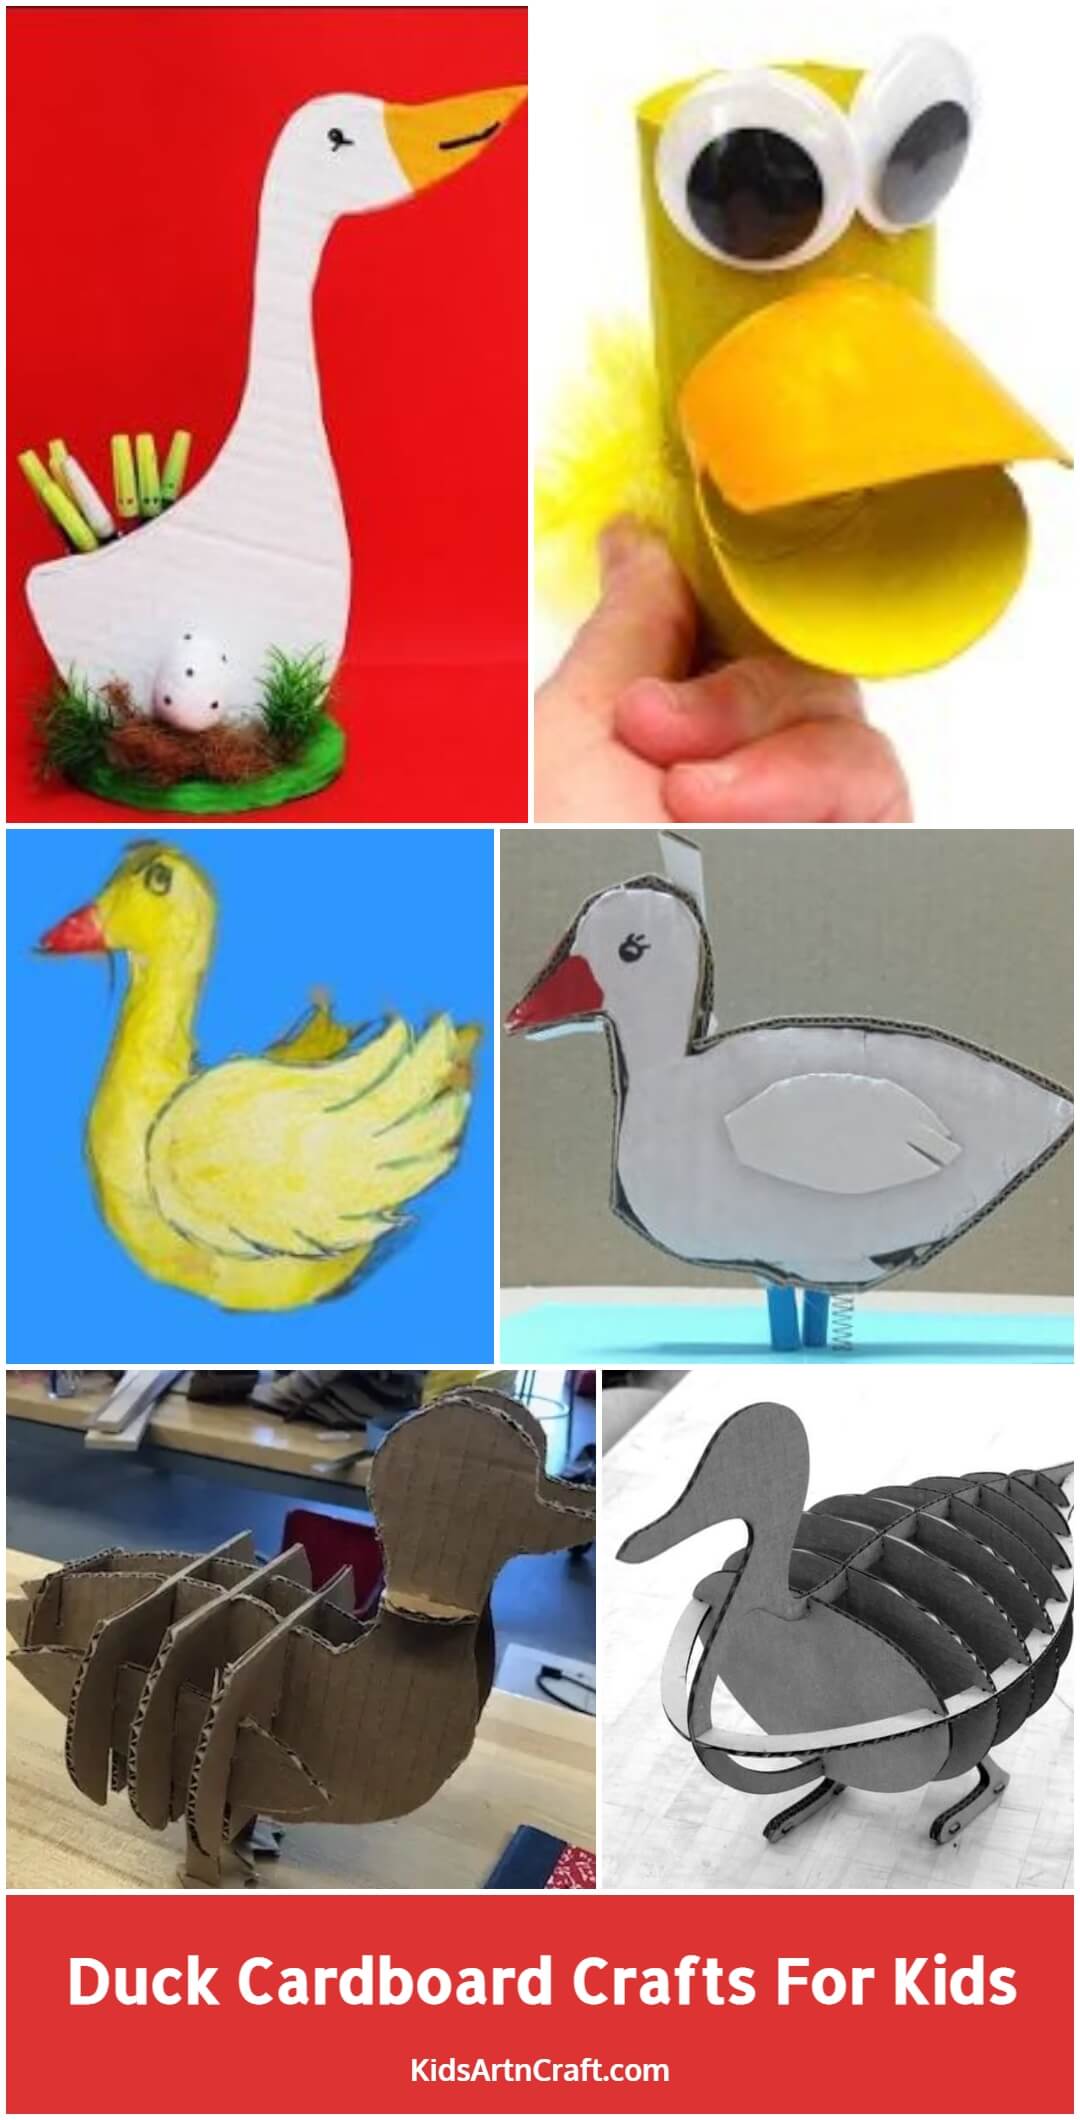 Duck Cardboard Crafts For Kids